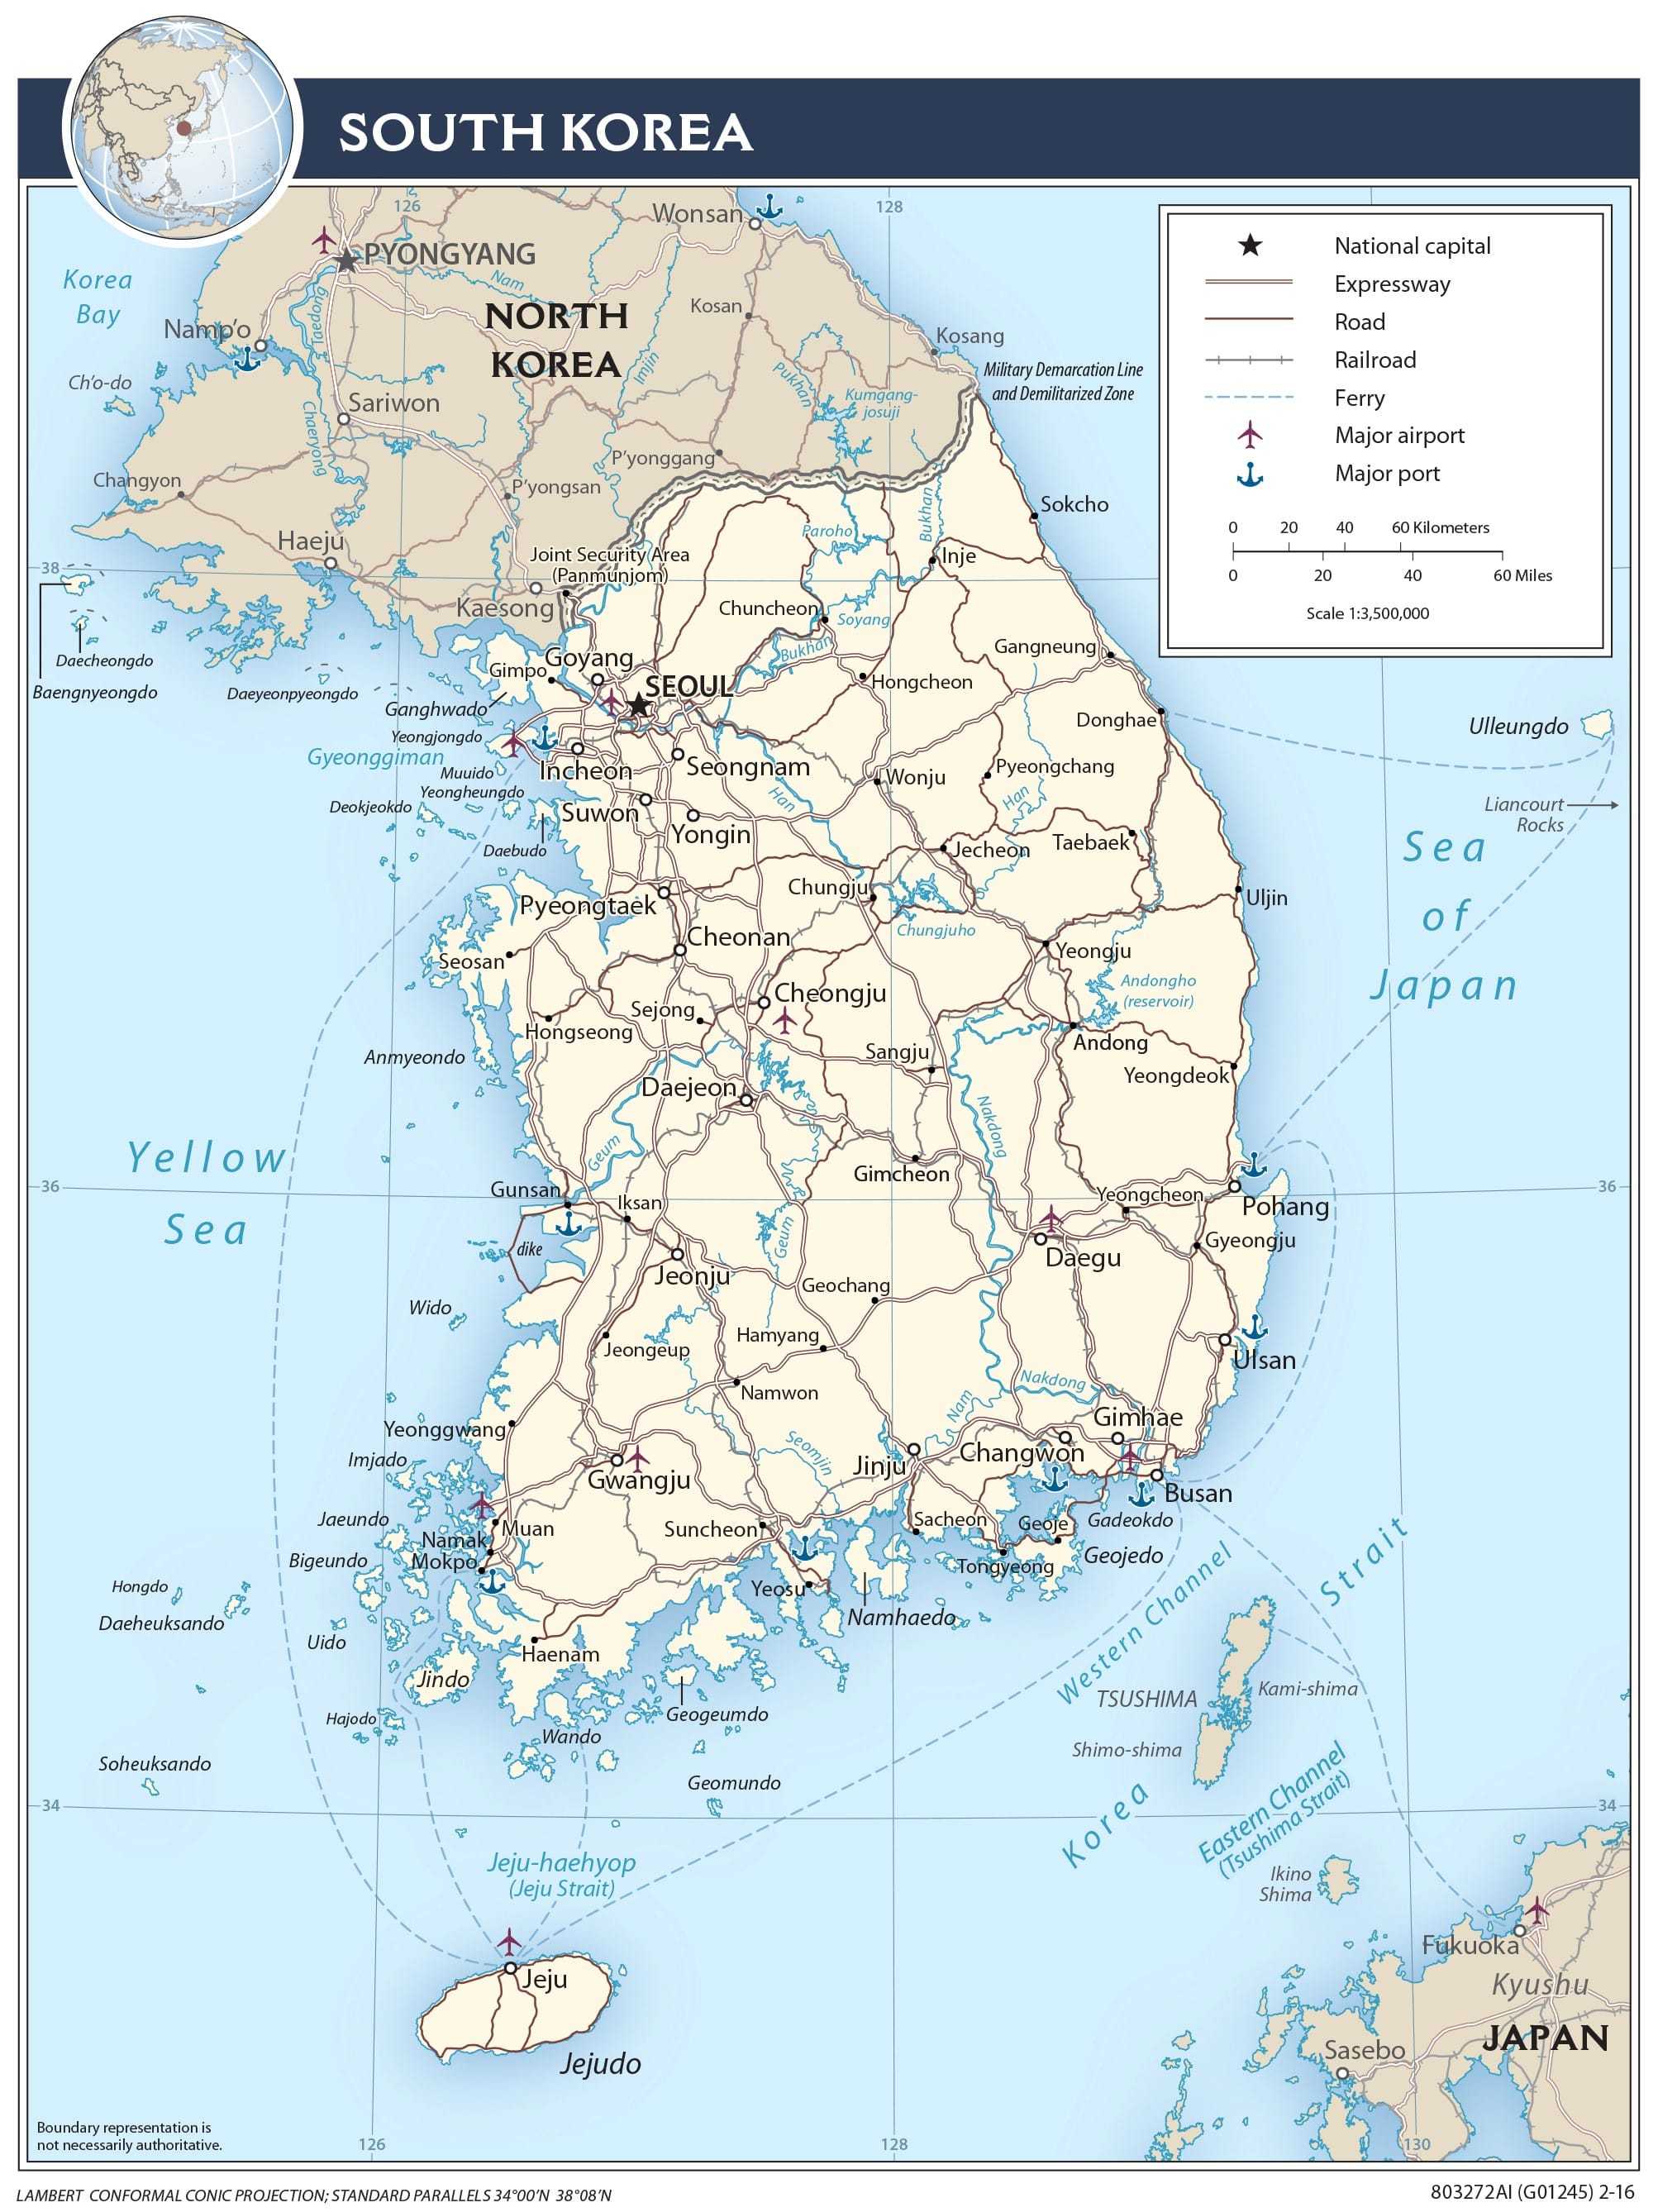 Transportation map of South Korea.